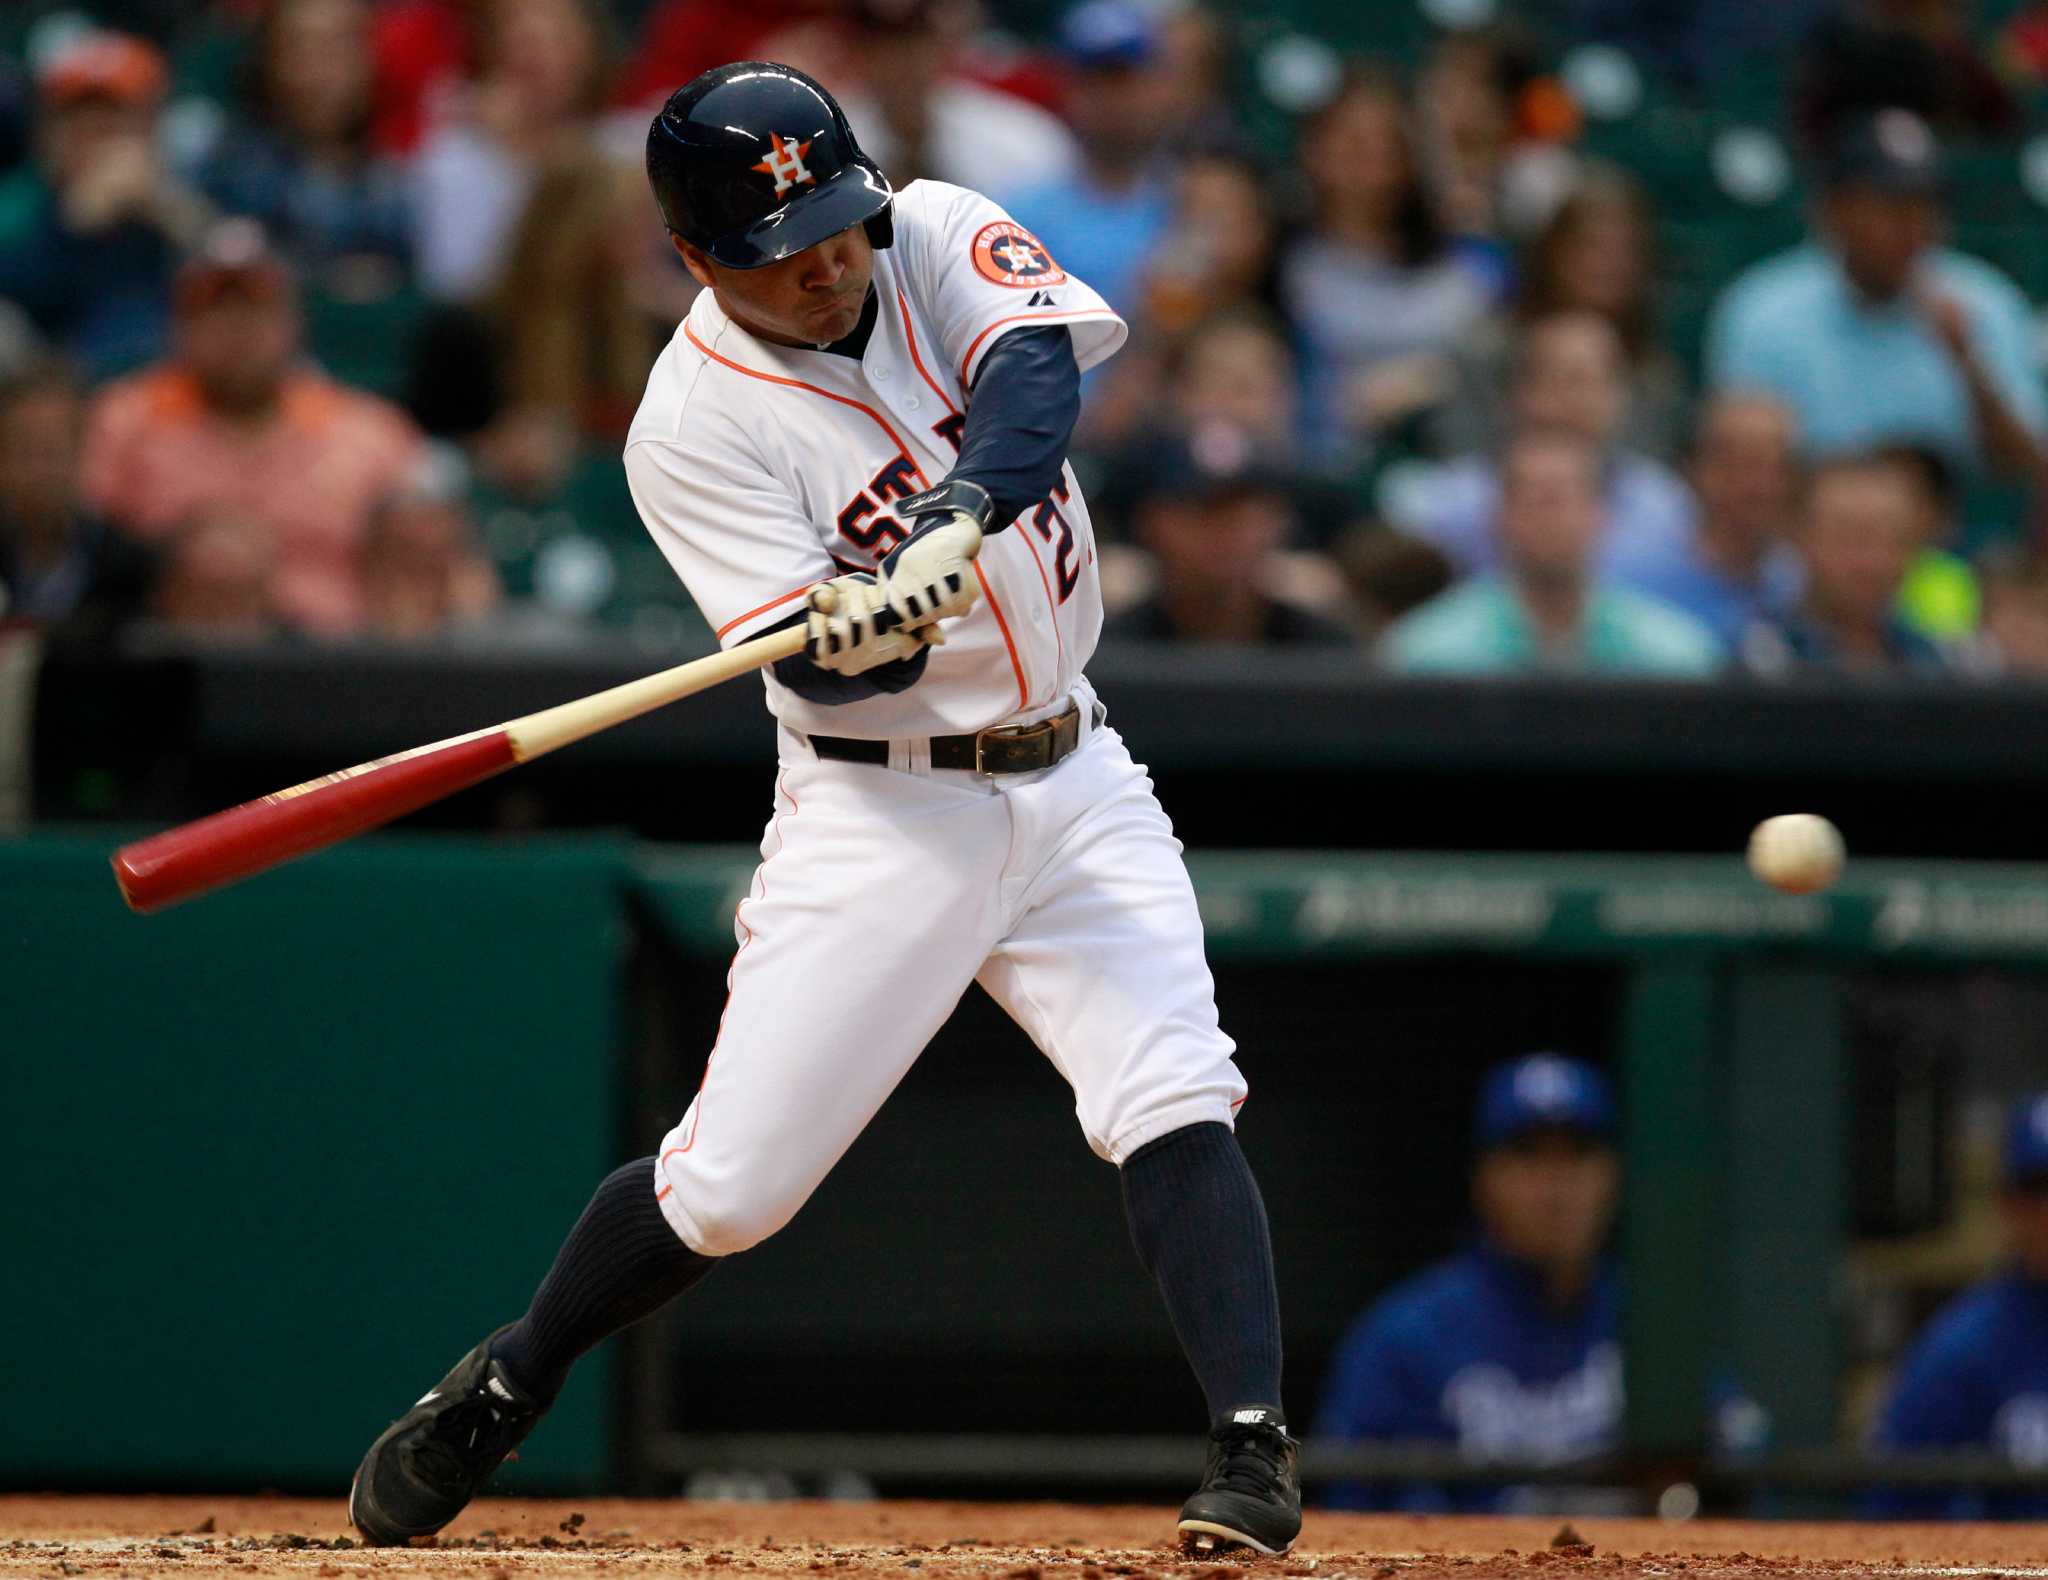 Change in swing has Astros' Altuve chasing career year